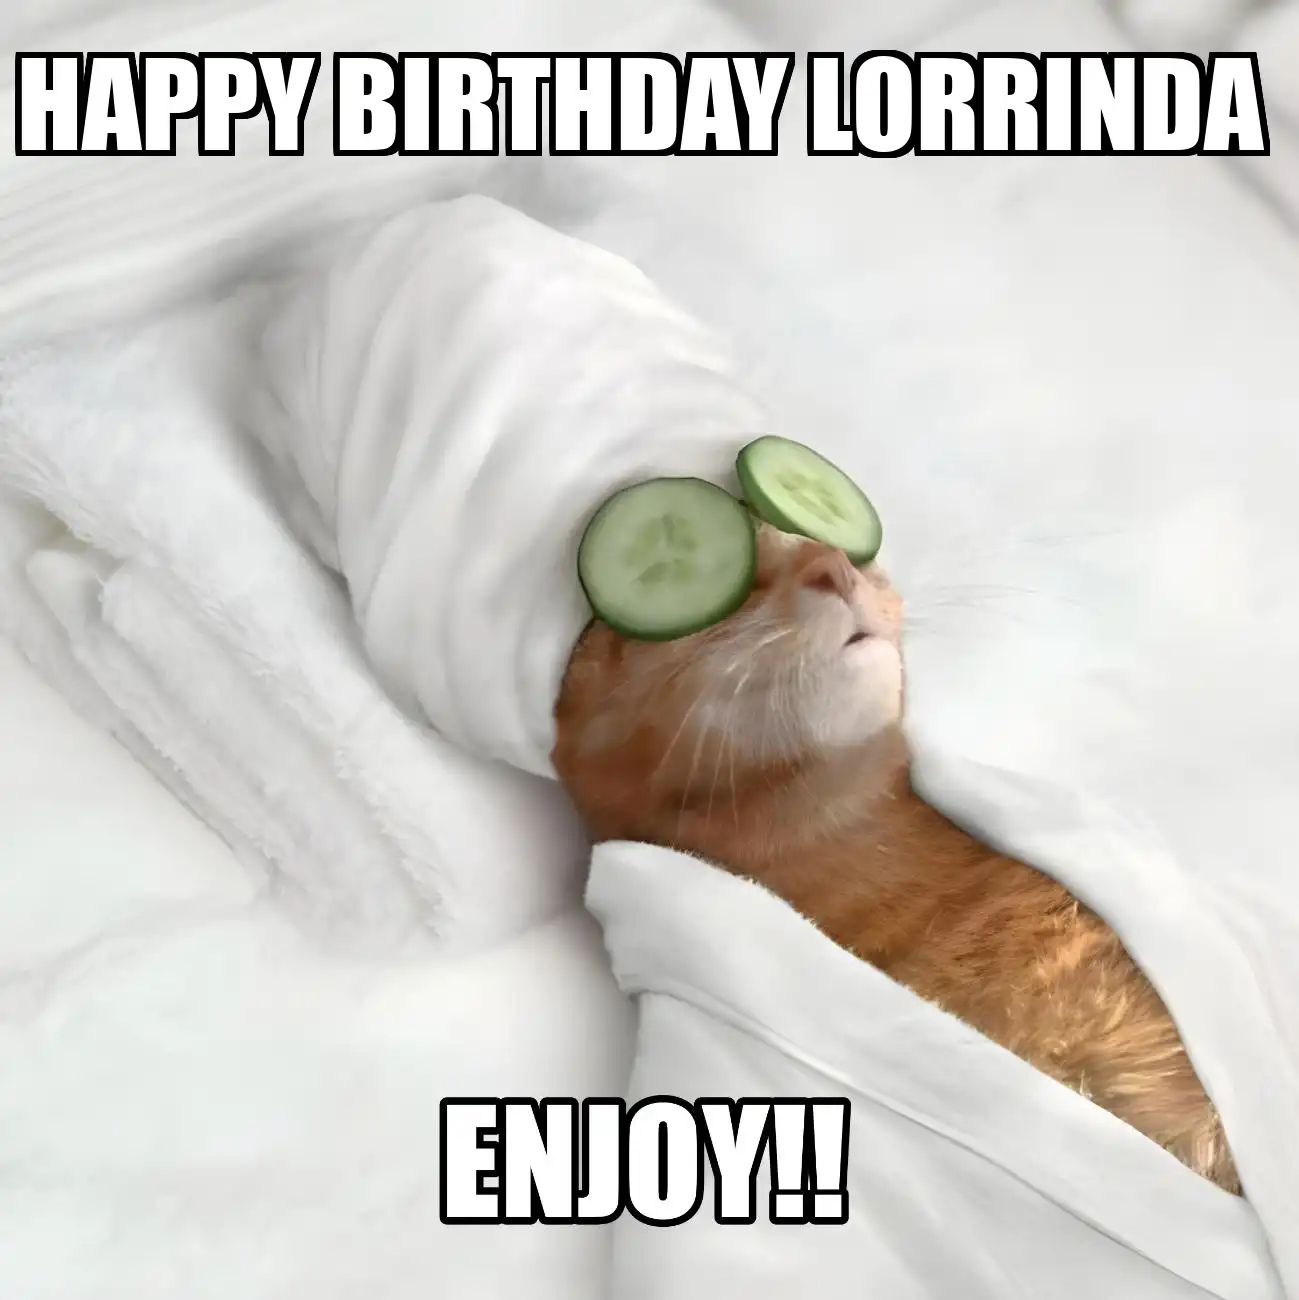 Happy Birthday Lorrinda Enjoy Cat Meme